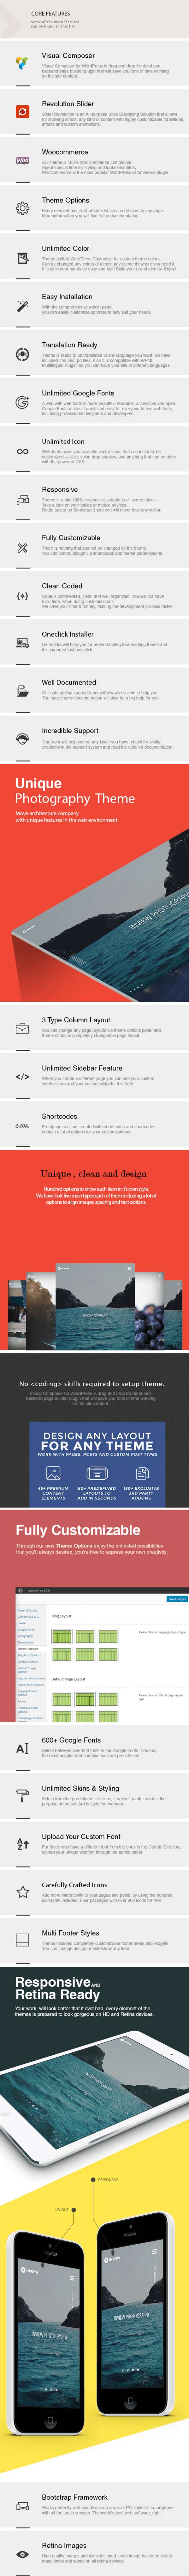 Inview - Full Screen Photography WordPress Theme - 3